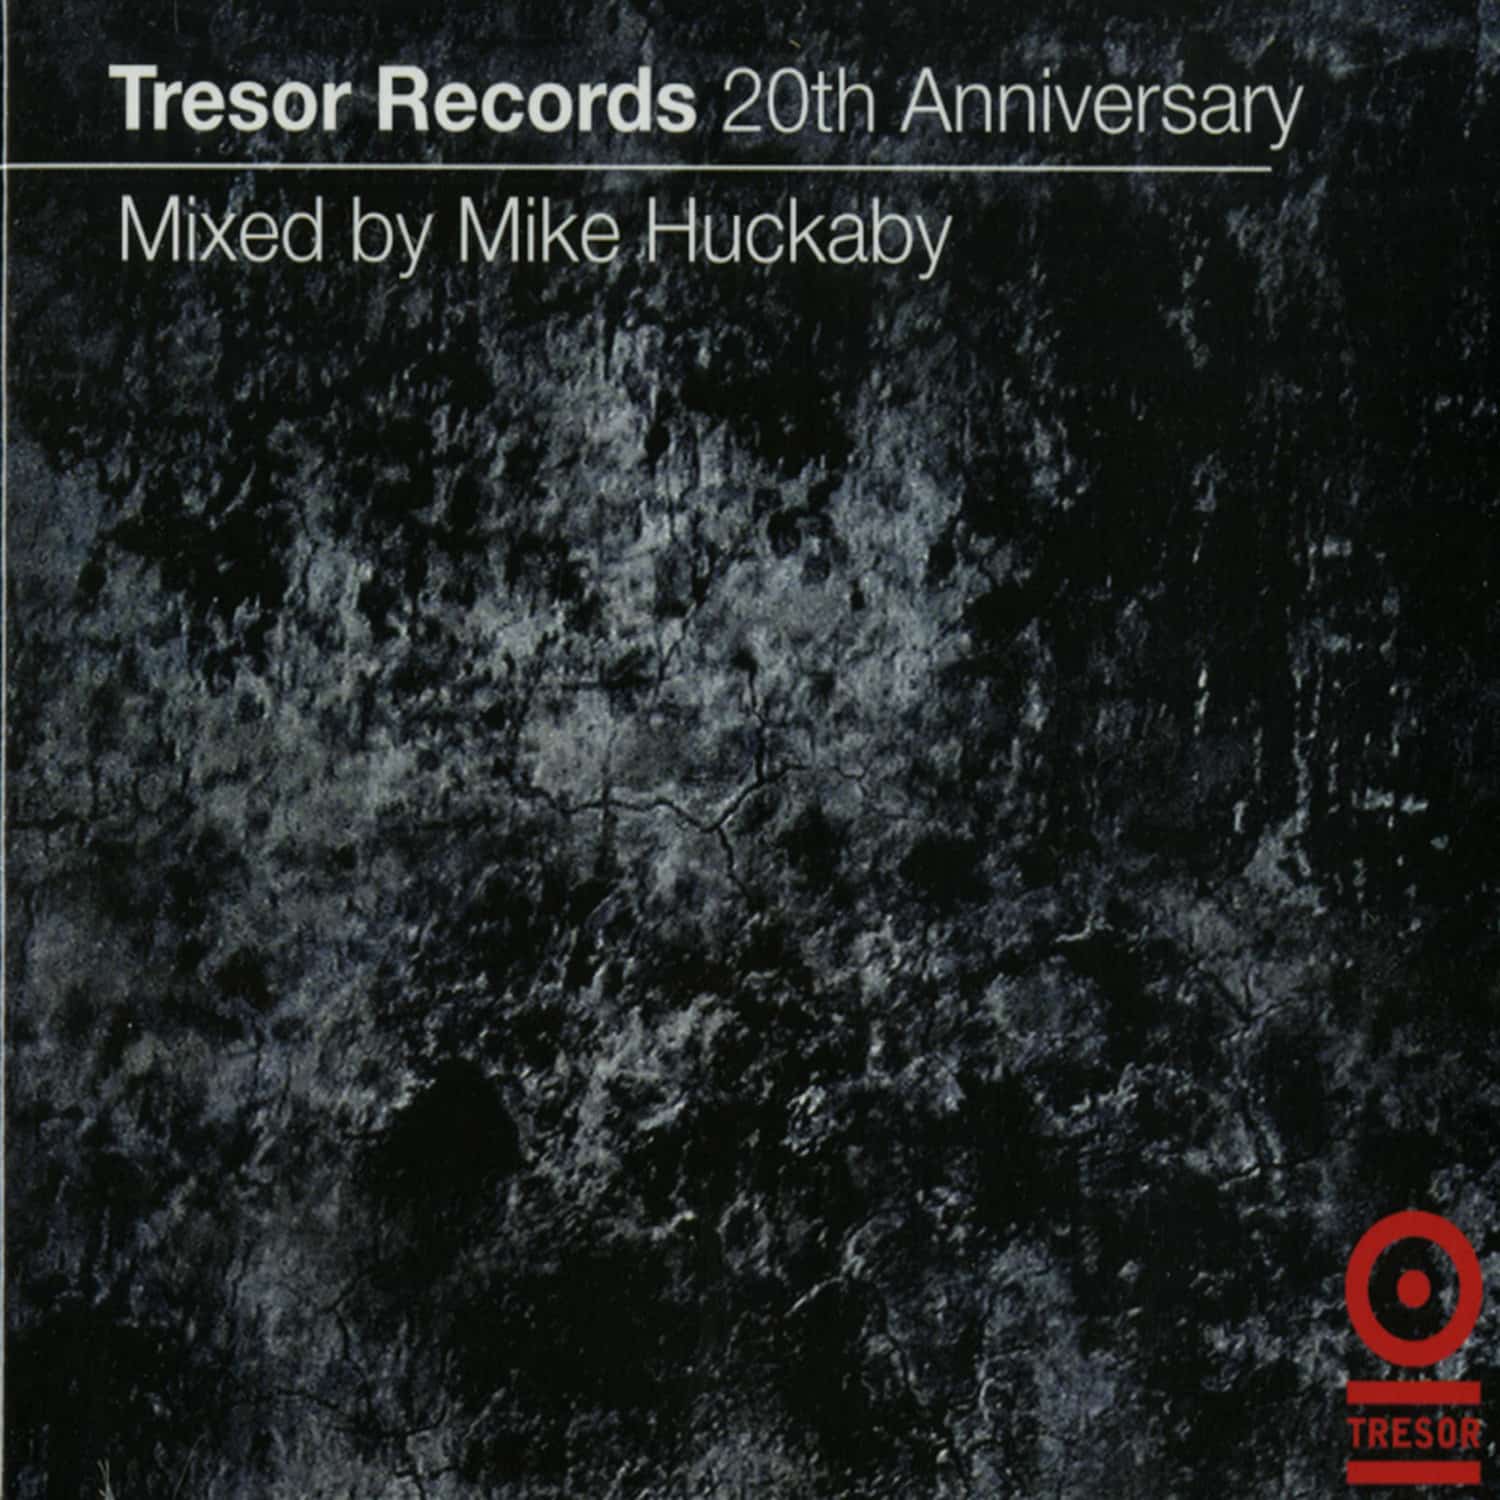 V/A mixed by Mike Huckaby - TRESOR RECORDS - 20TH ANNIVERSARY 